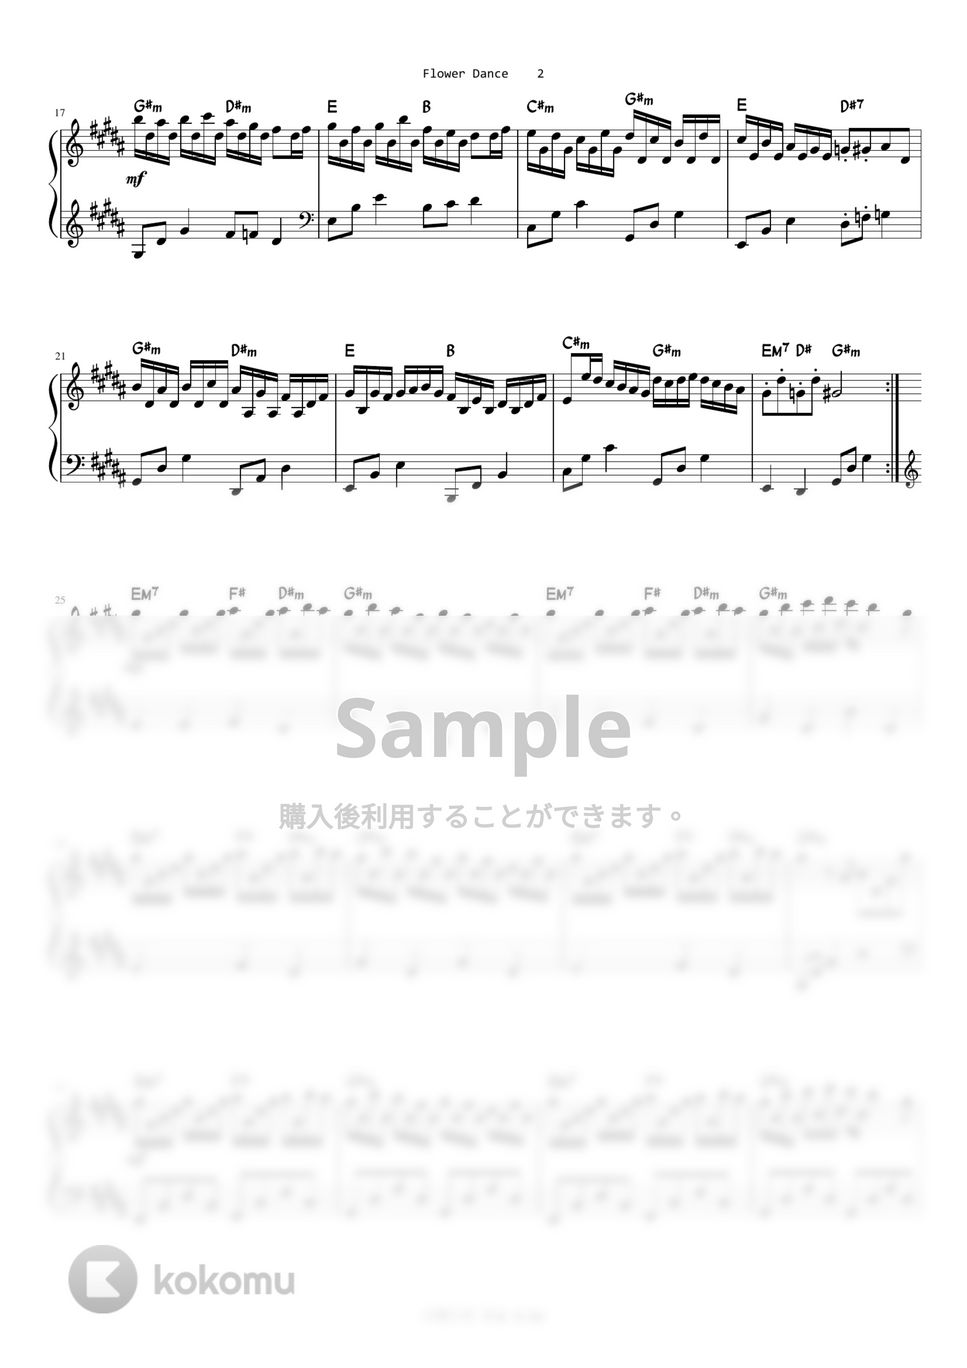 DJ OKAWARI - Flower Dance (Level 3 -Original Key) by A.Ha